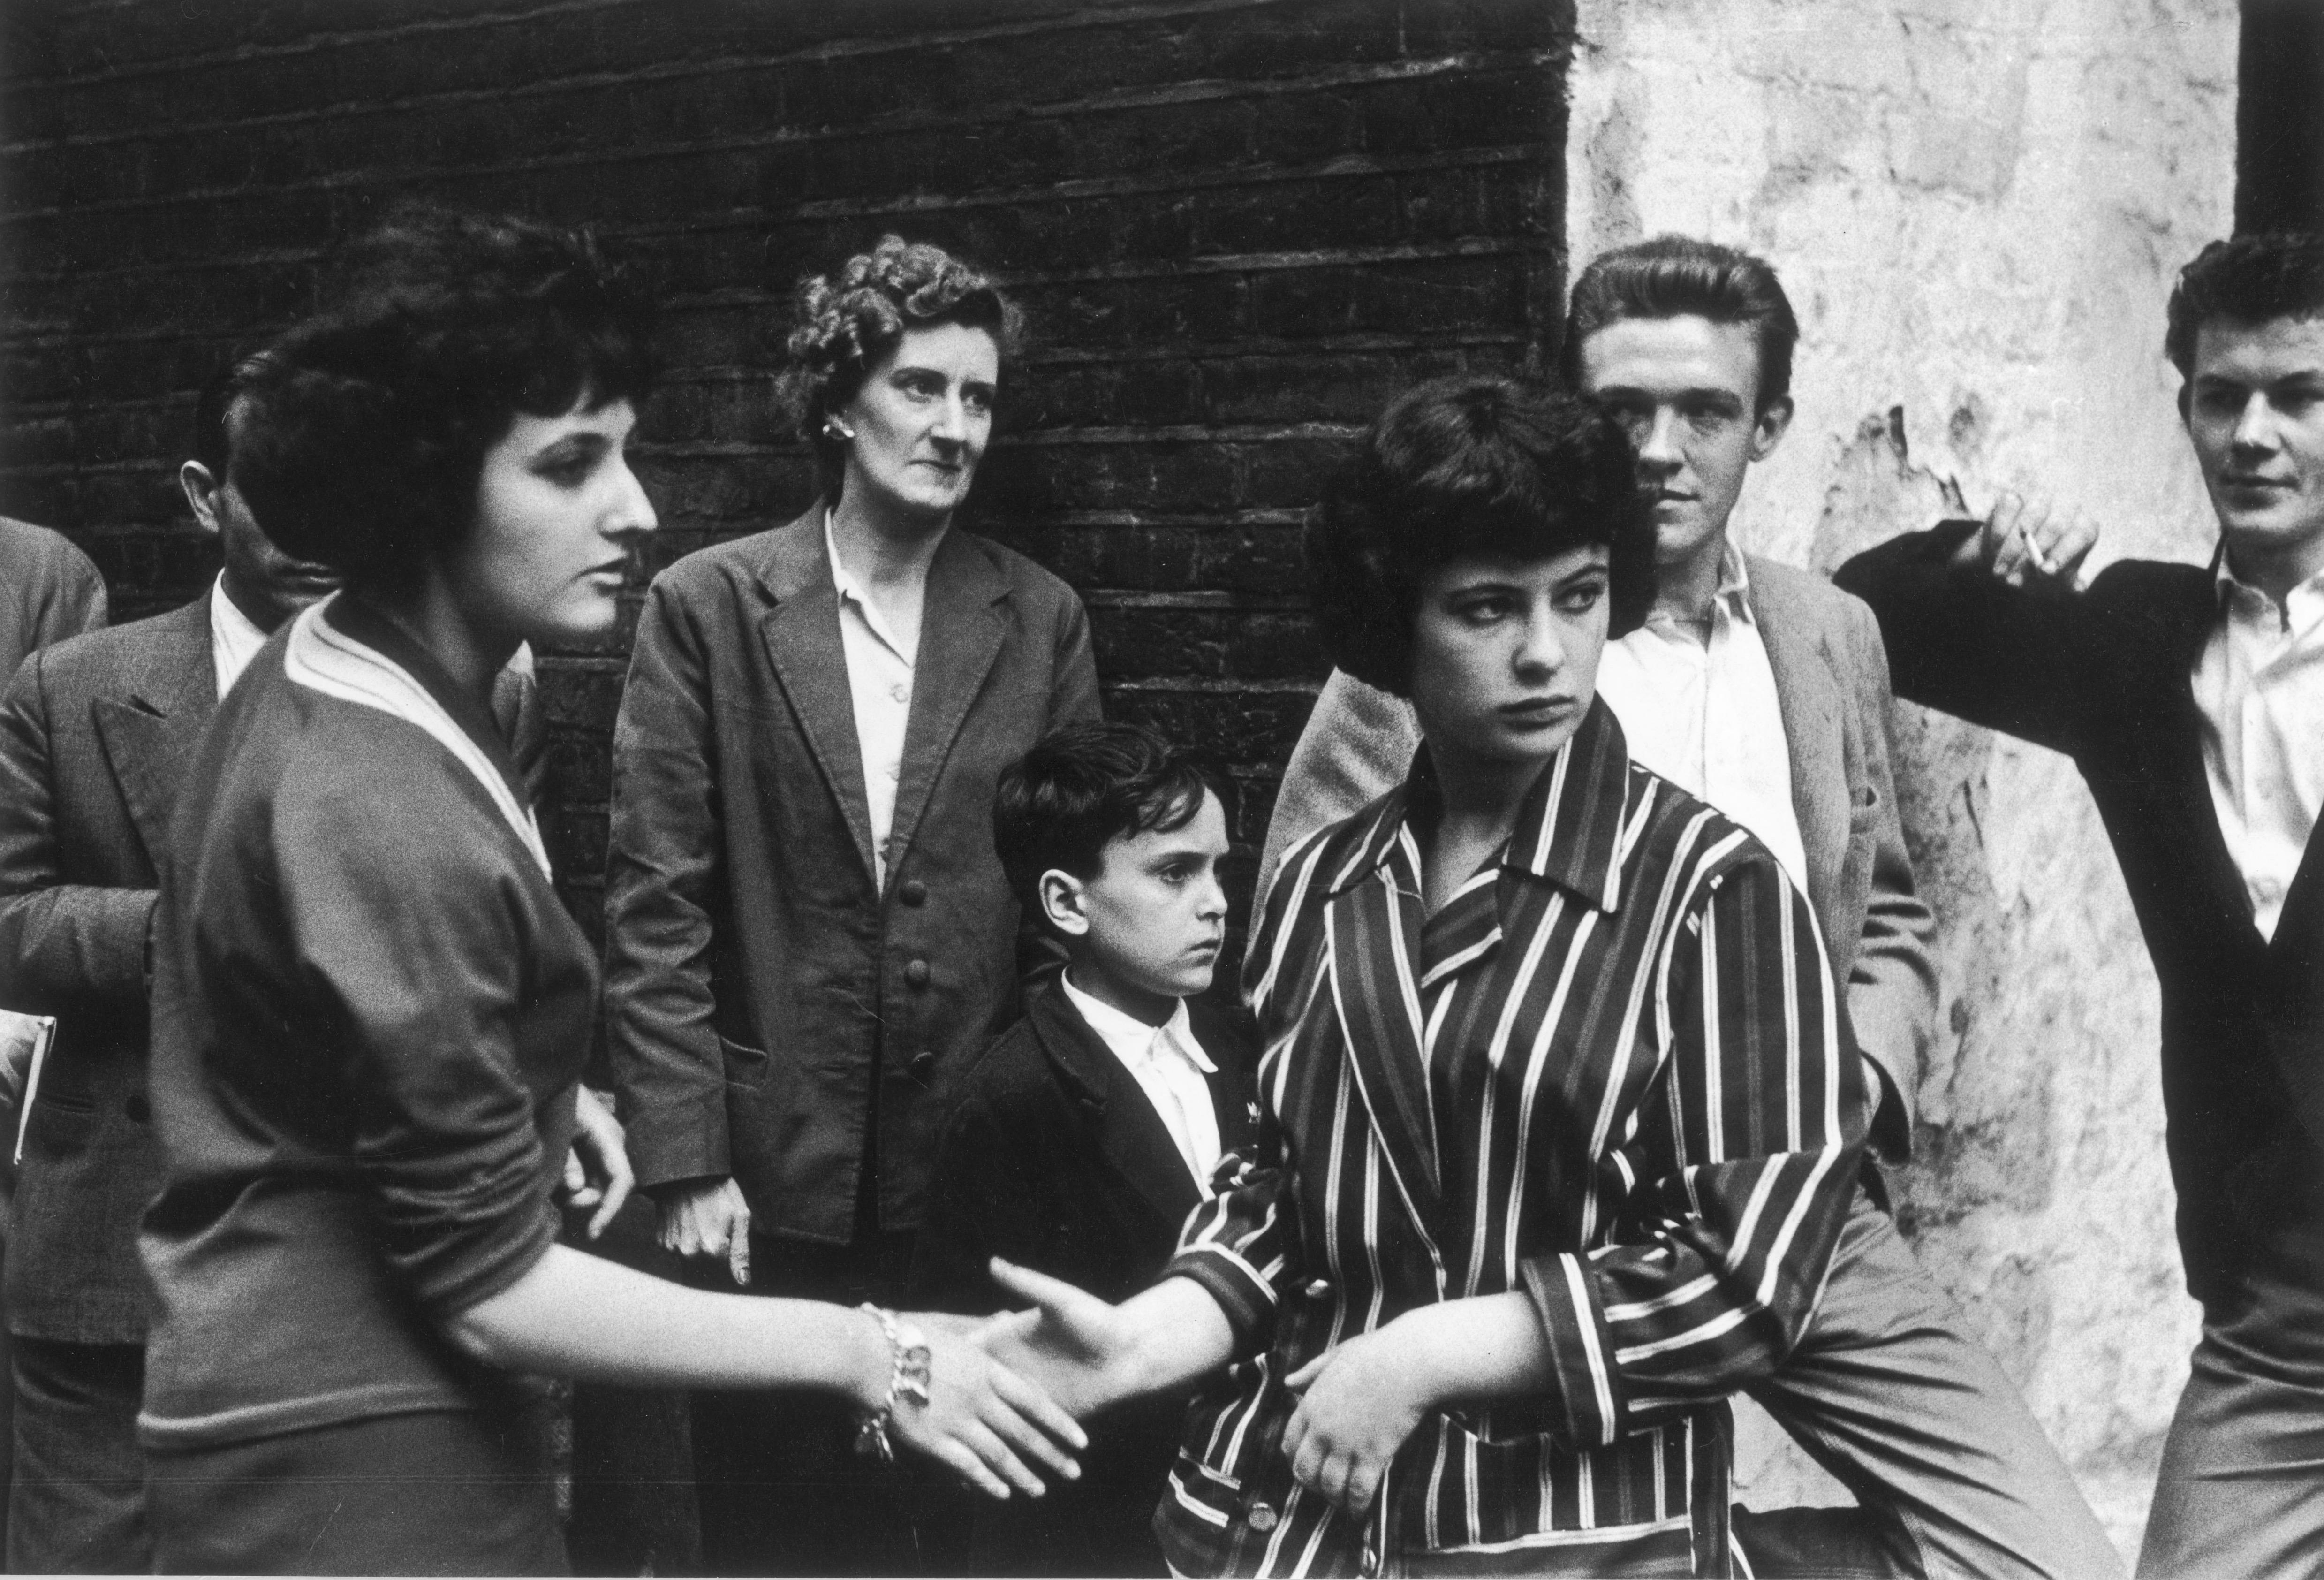 5. Teenagers, Soho Fair, London, 17 July 1958